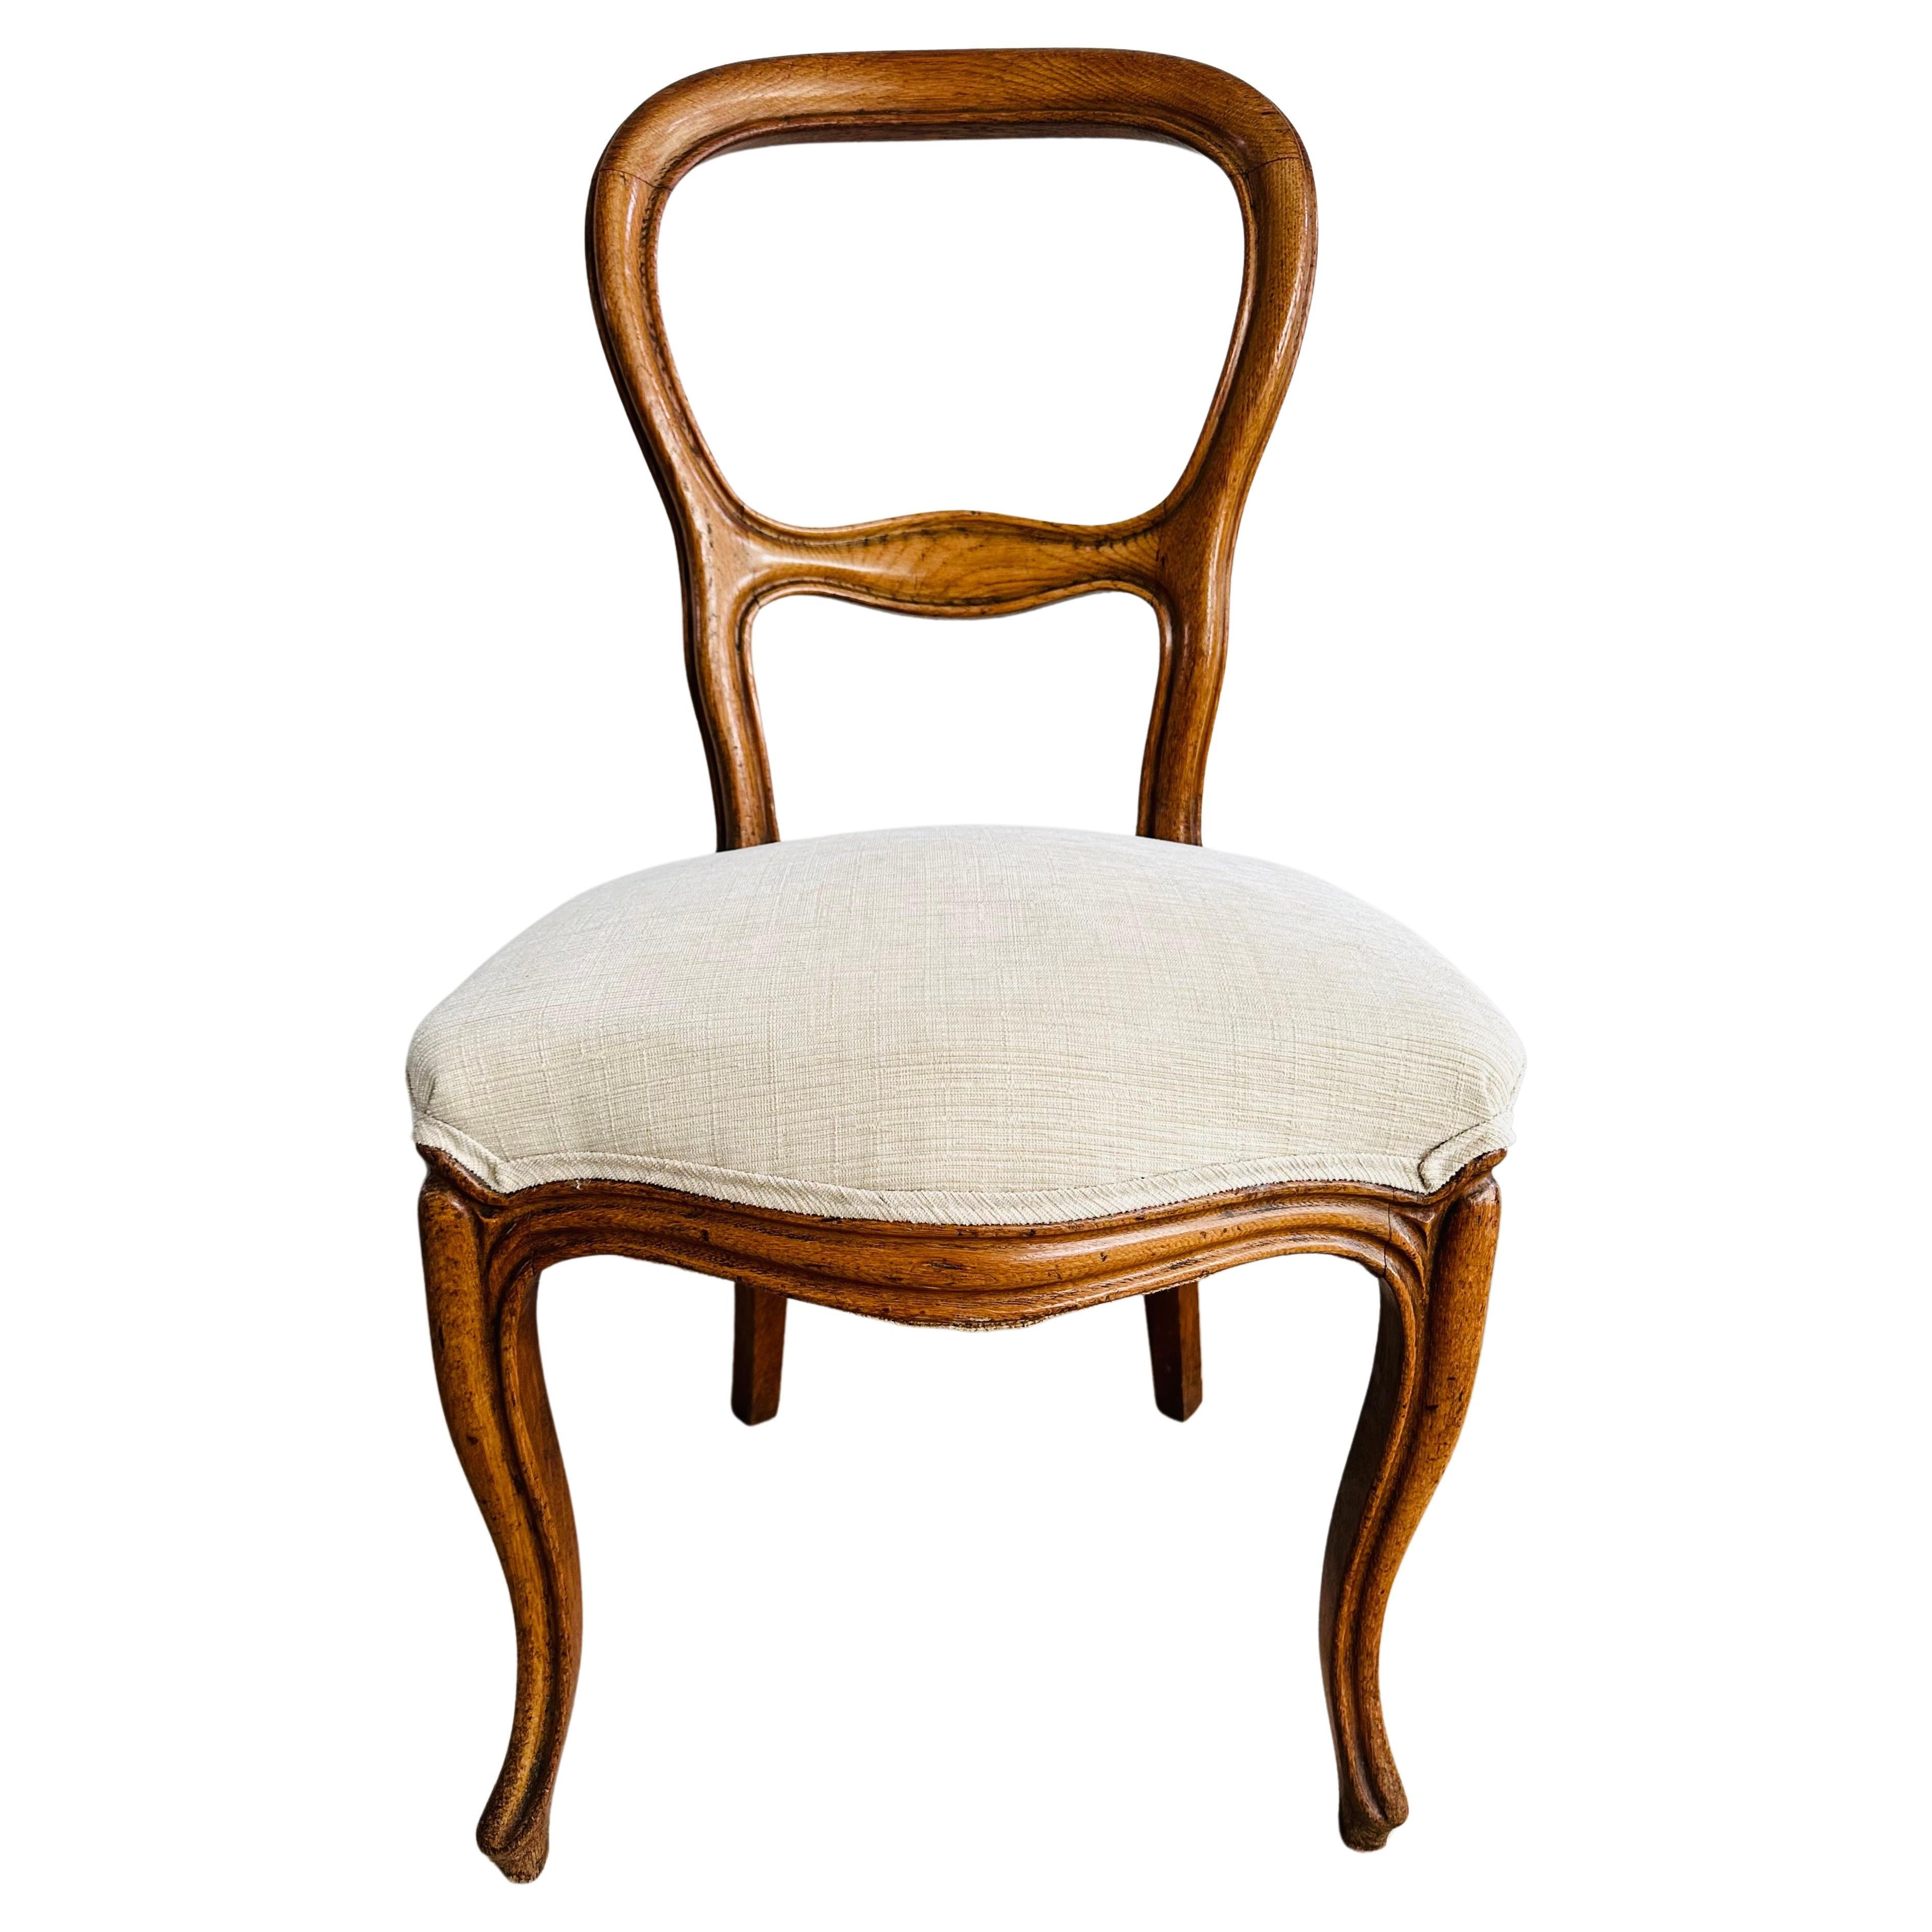 Circa 1900 English Oak Balloon Back Dining or Side Chair Newly Reupholstered (Chaise de salle à manger ou d'appoint à dossier ballon en chêne anglais)  en vente